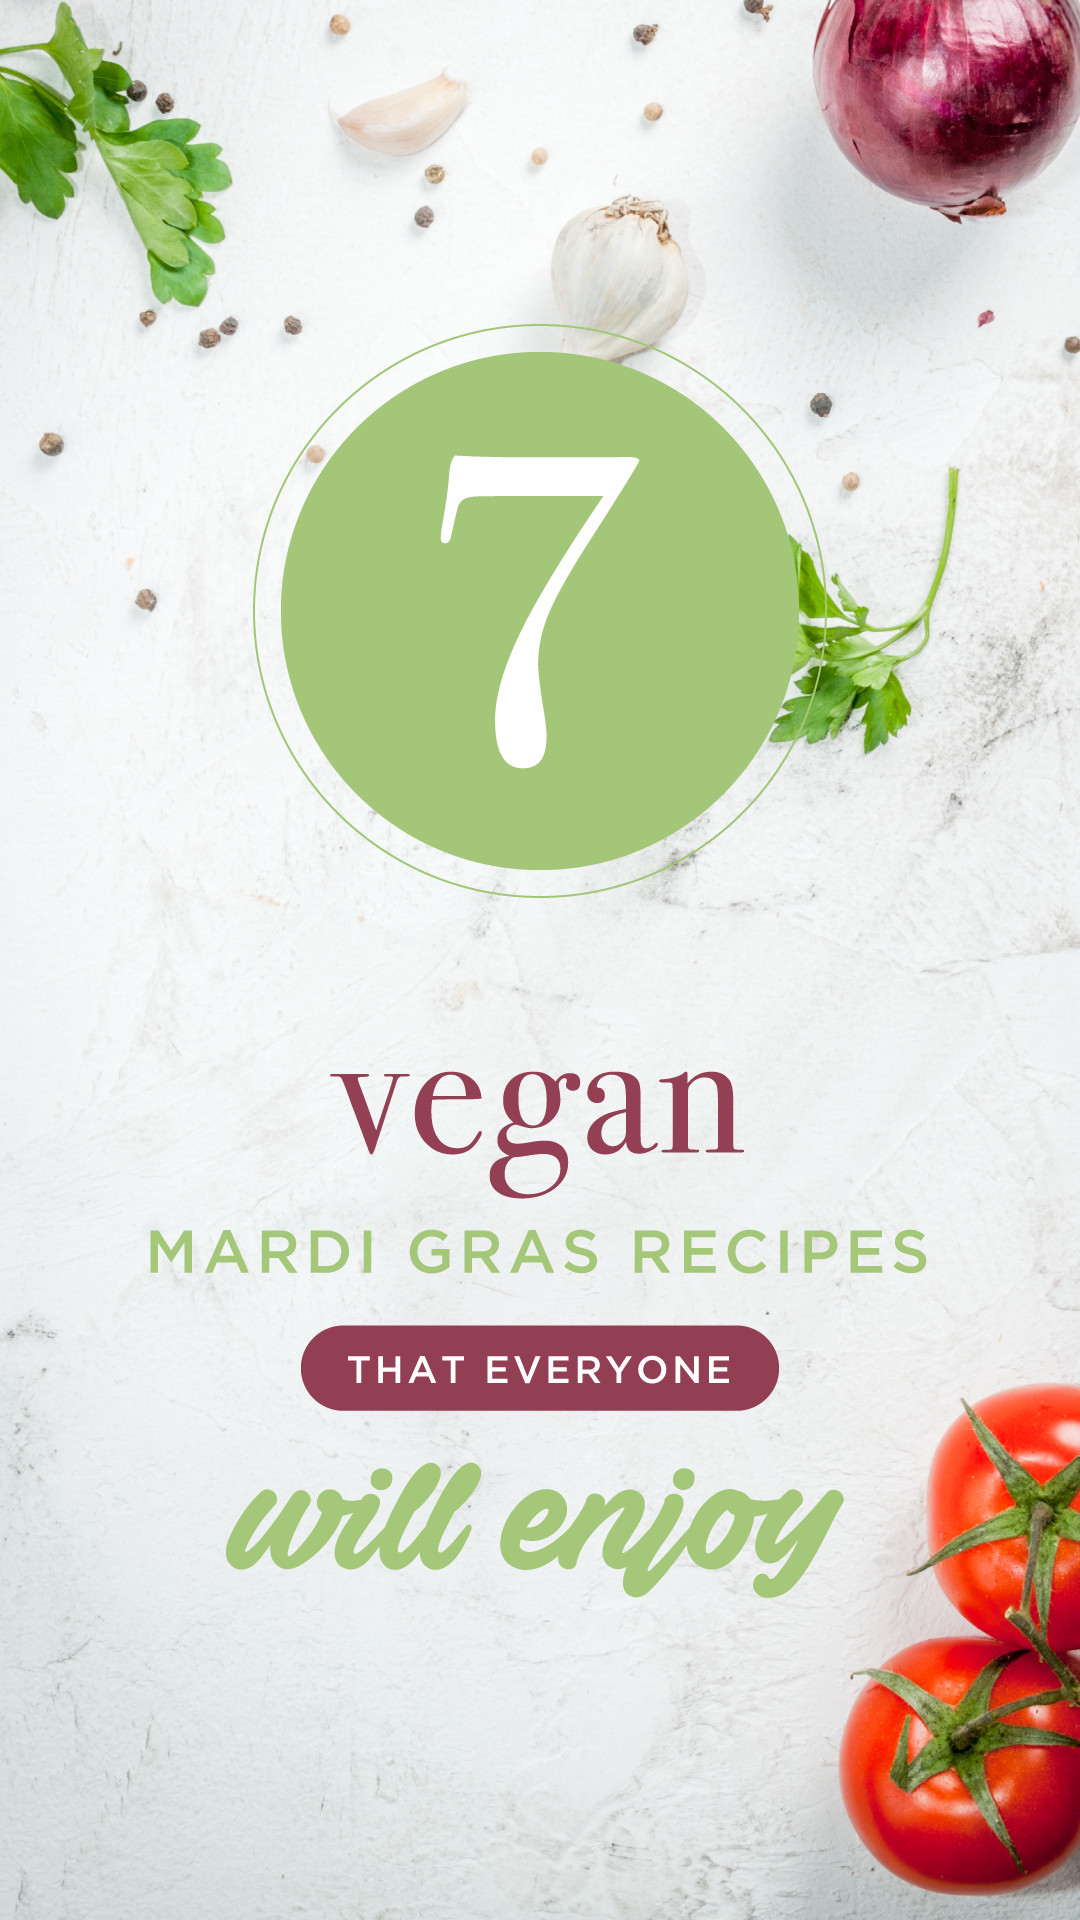 Vegetarian Mardi Gras Recipes
 7 Vegan Mardi Gras Recipes That Everyone Will Enjoy